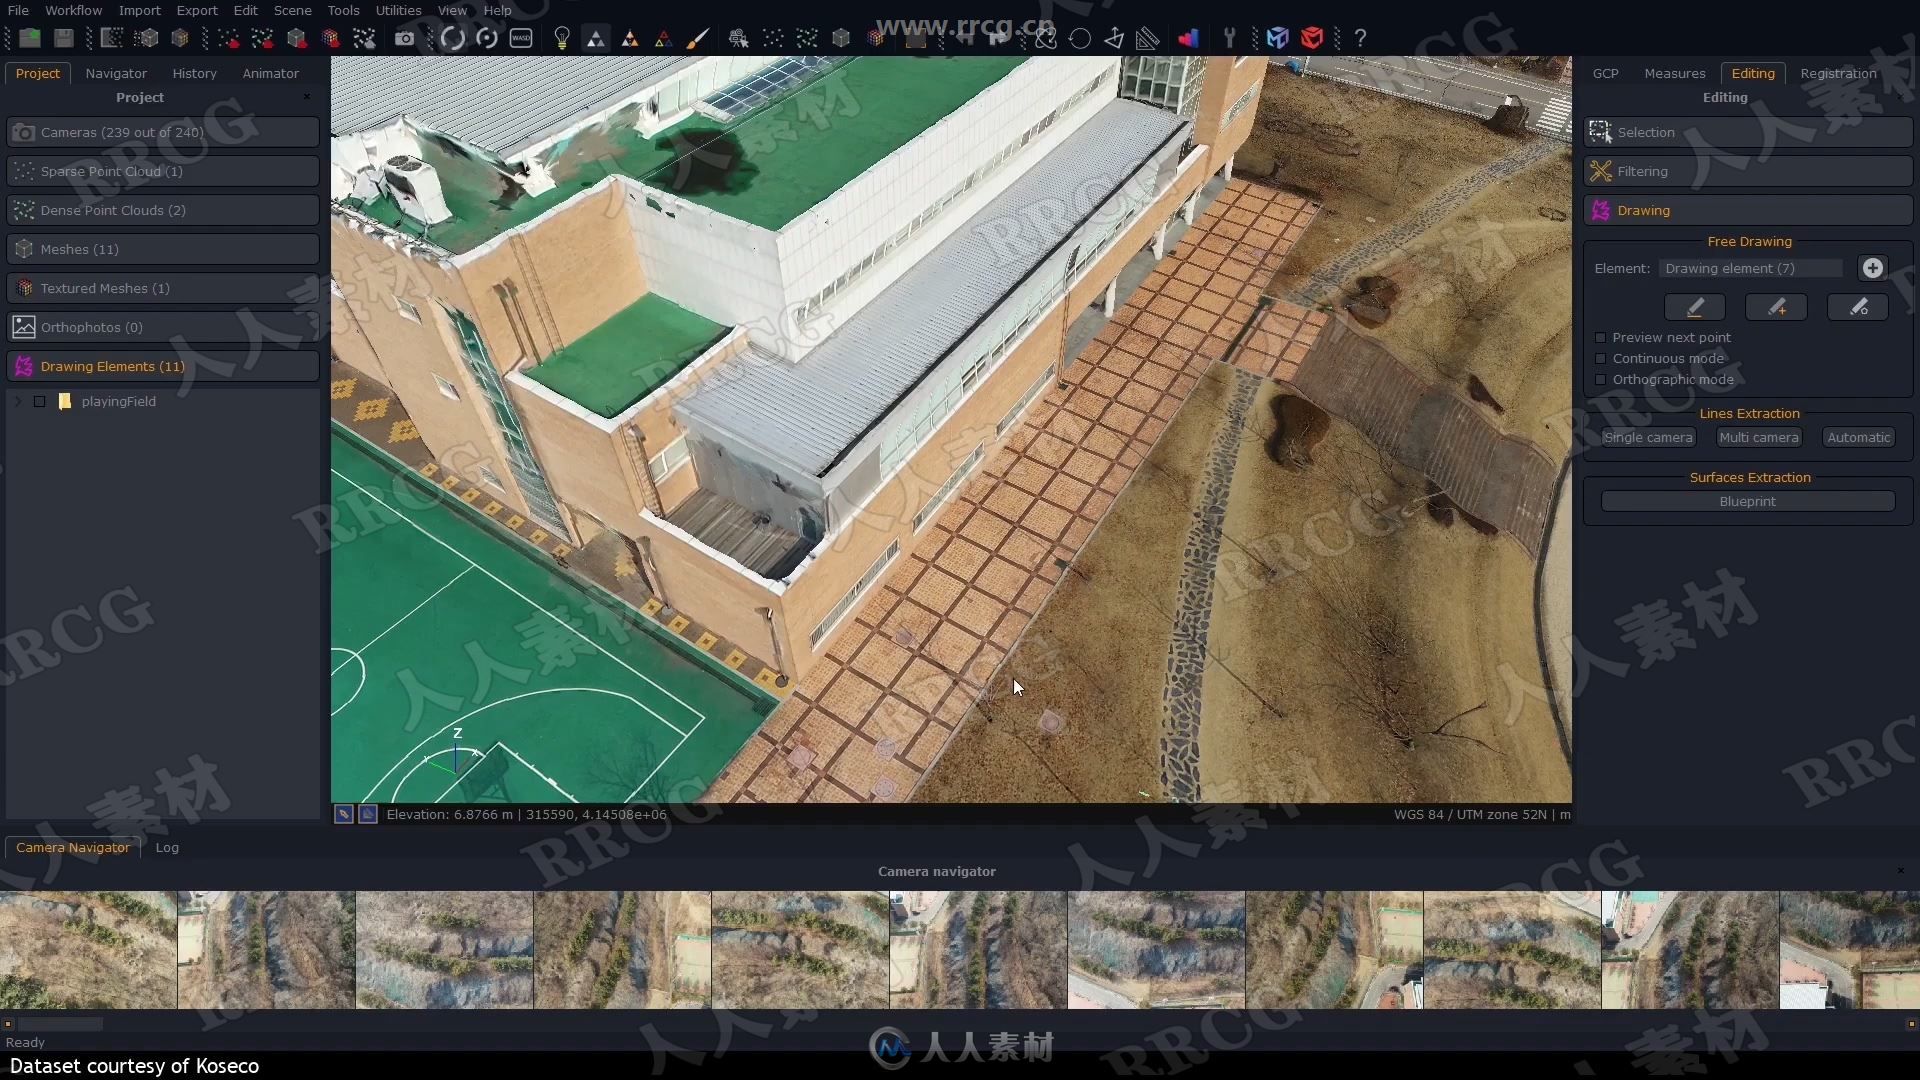 3DF Zephyr Aerial照片自动三维化软件V5.005版